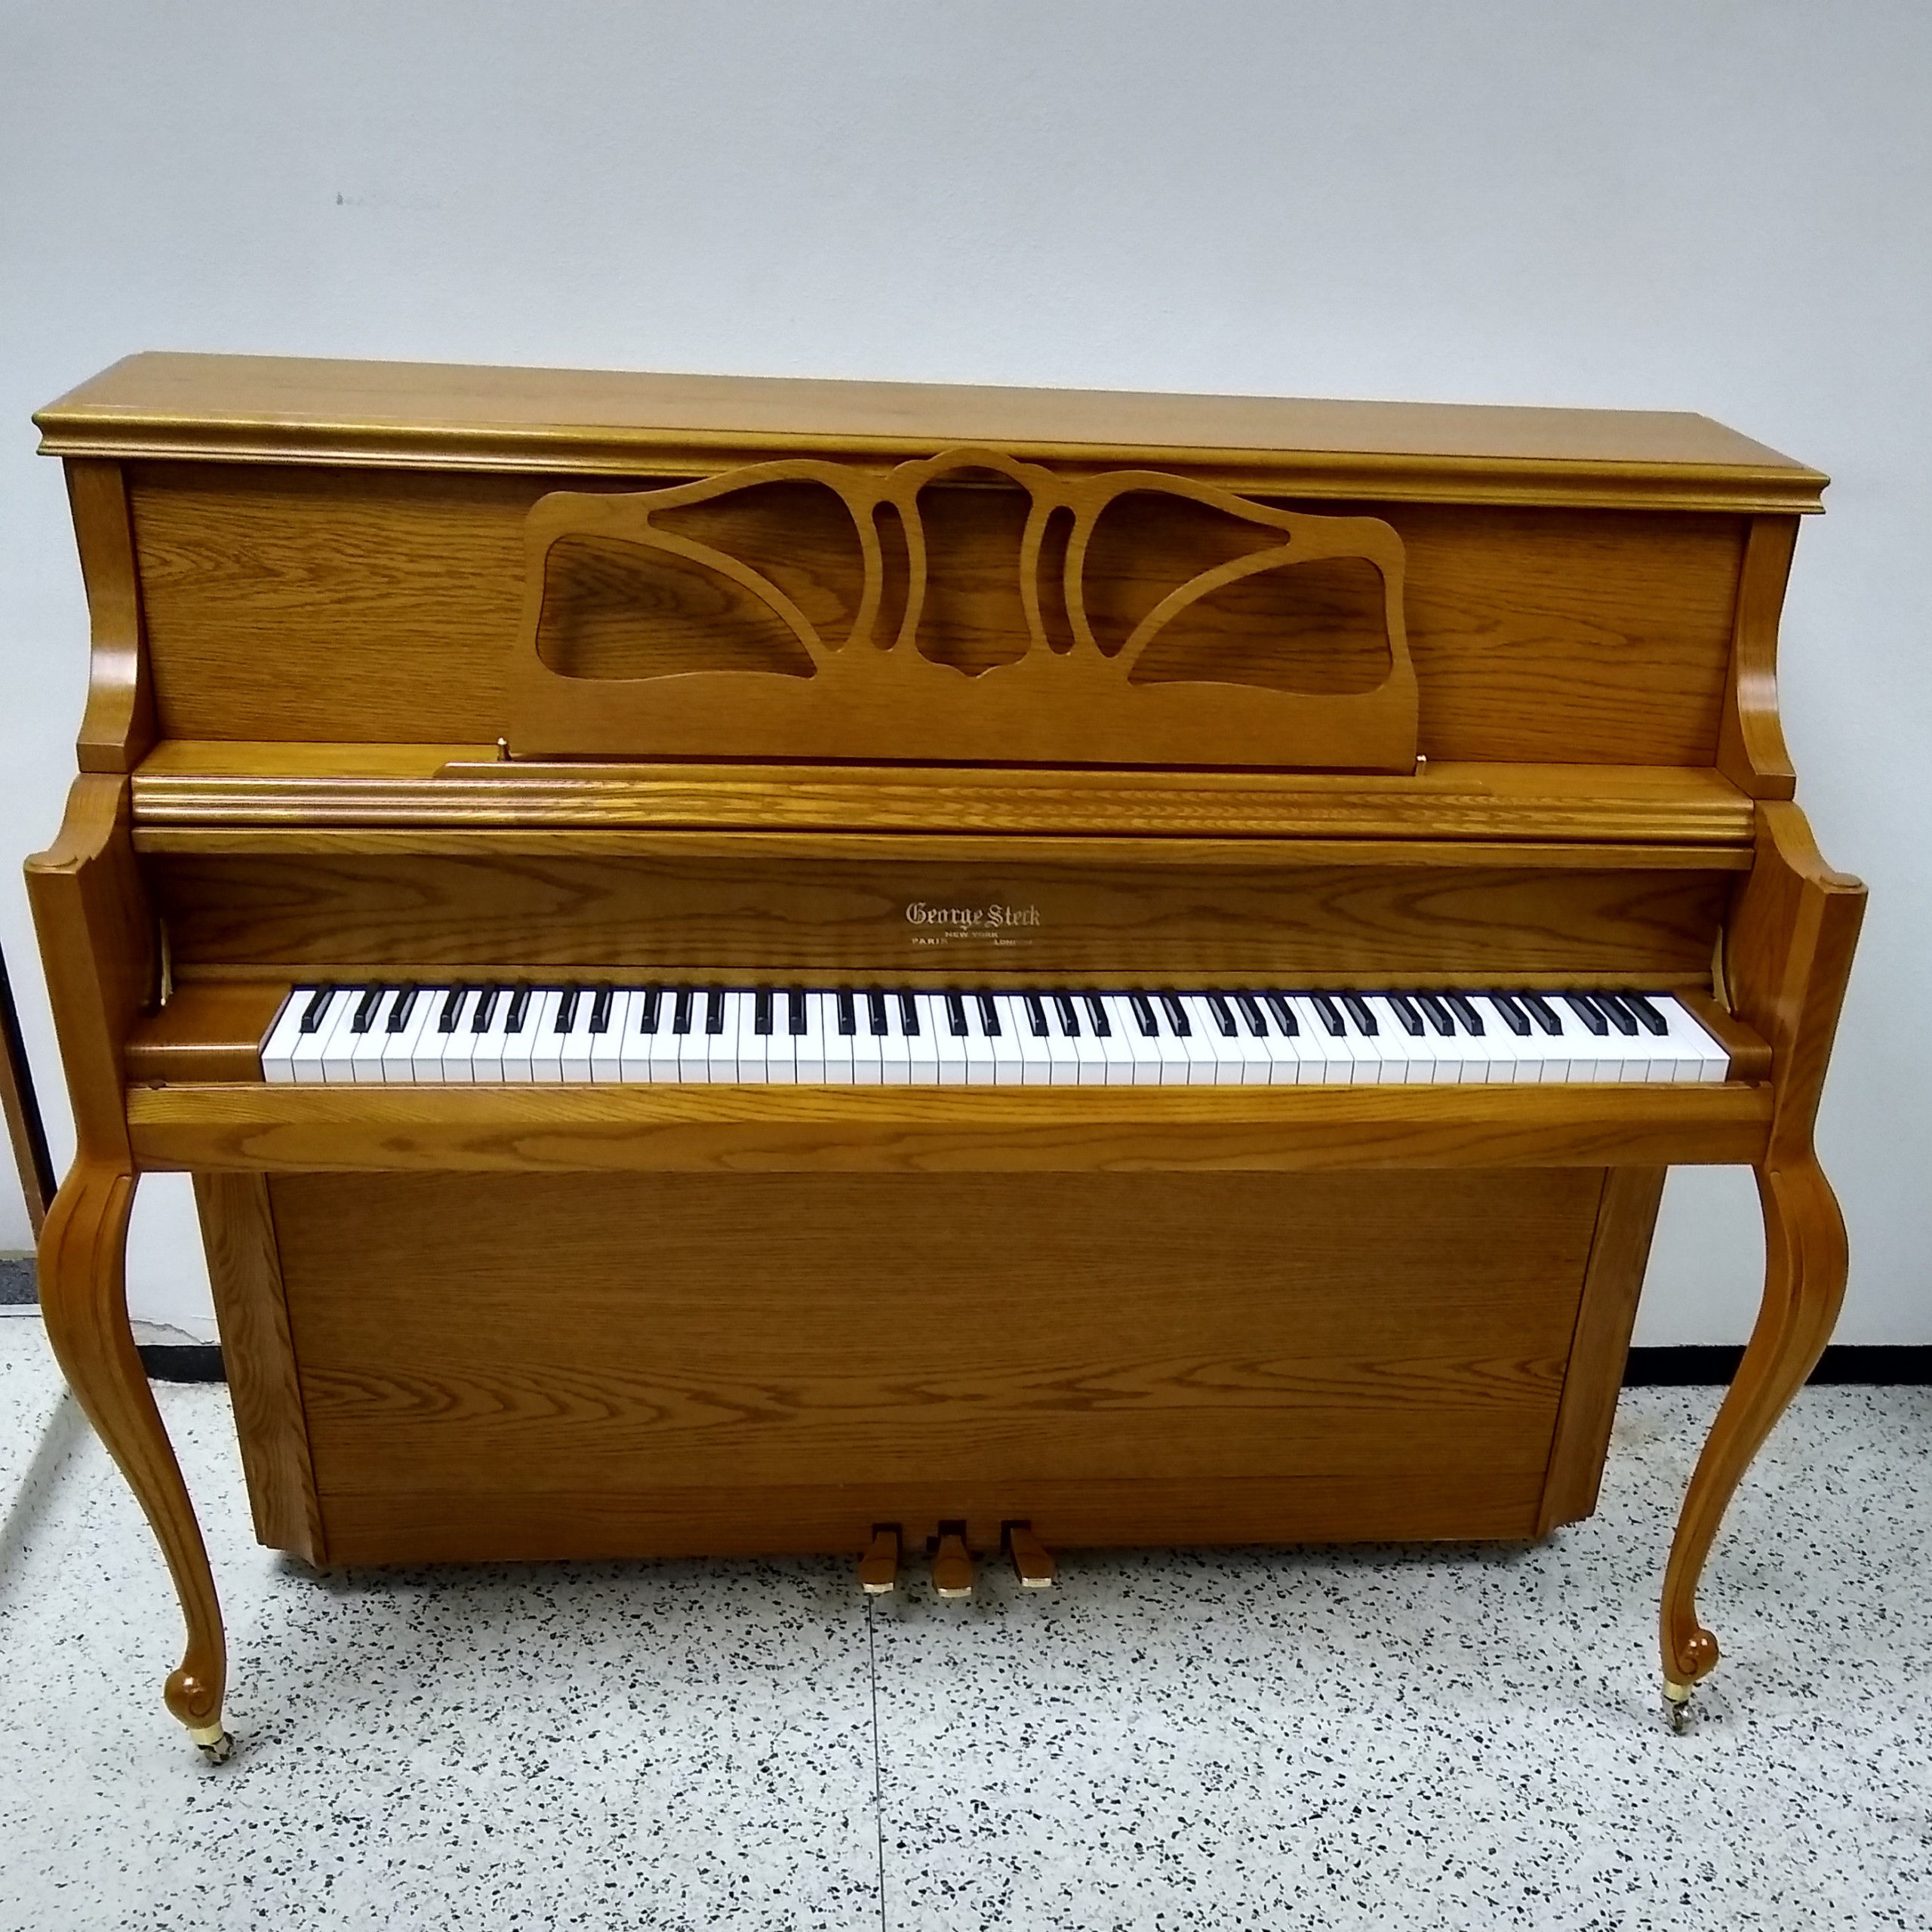 George Steck Upright Piano Ltd Edition